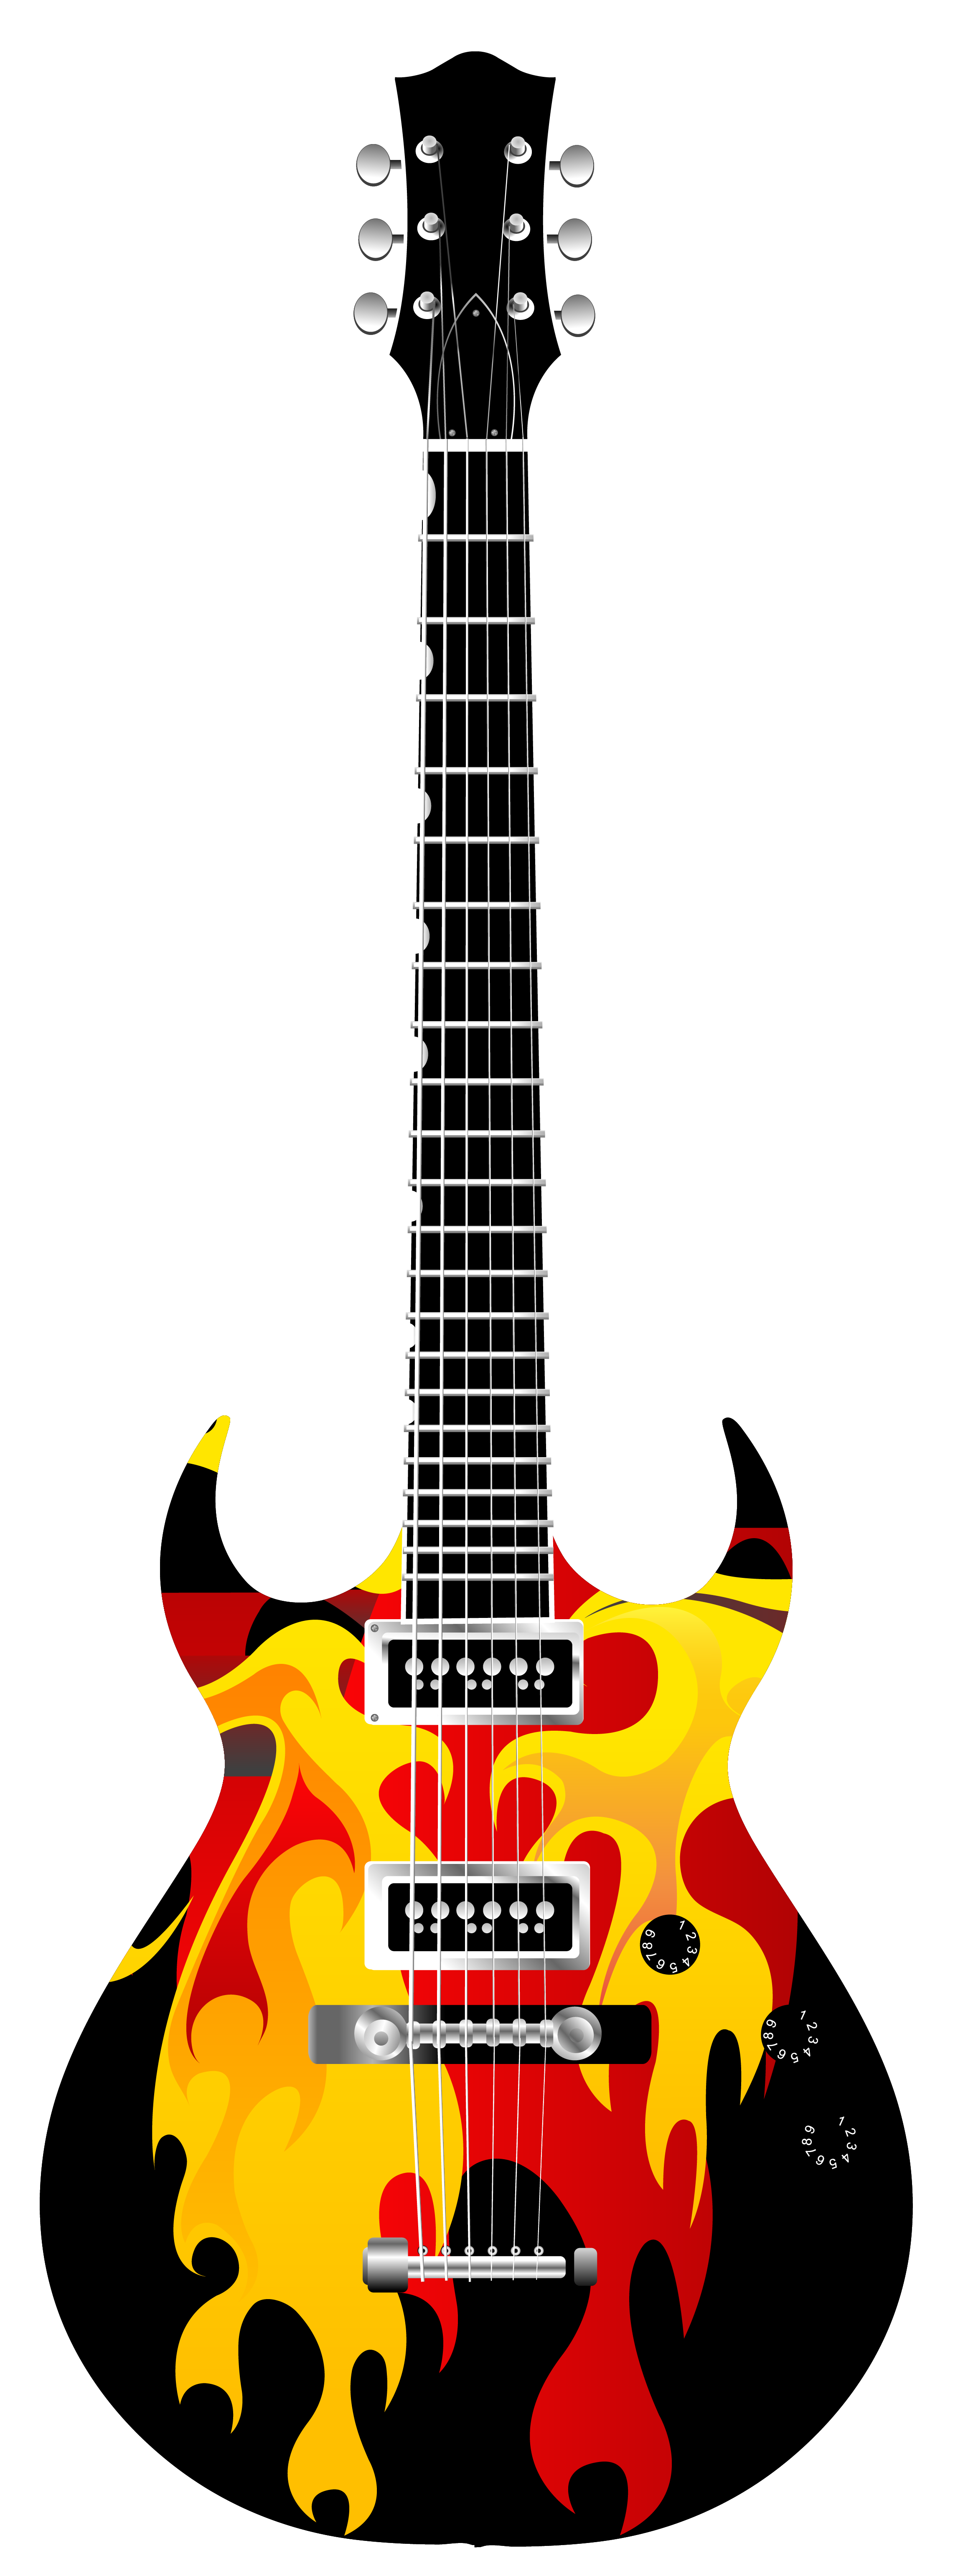 Featured image of post Guitarra Amarela Desenho Png Solo aceptamos im genes de alta calidad m nimo 400x400 p xeles